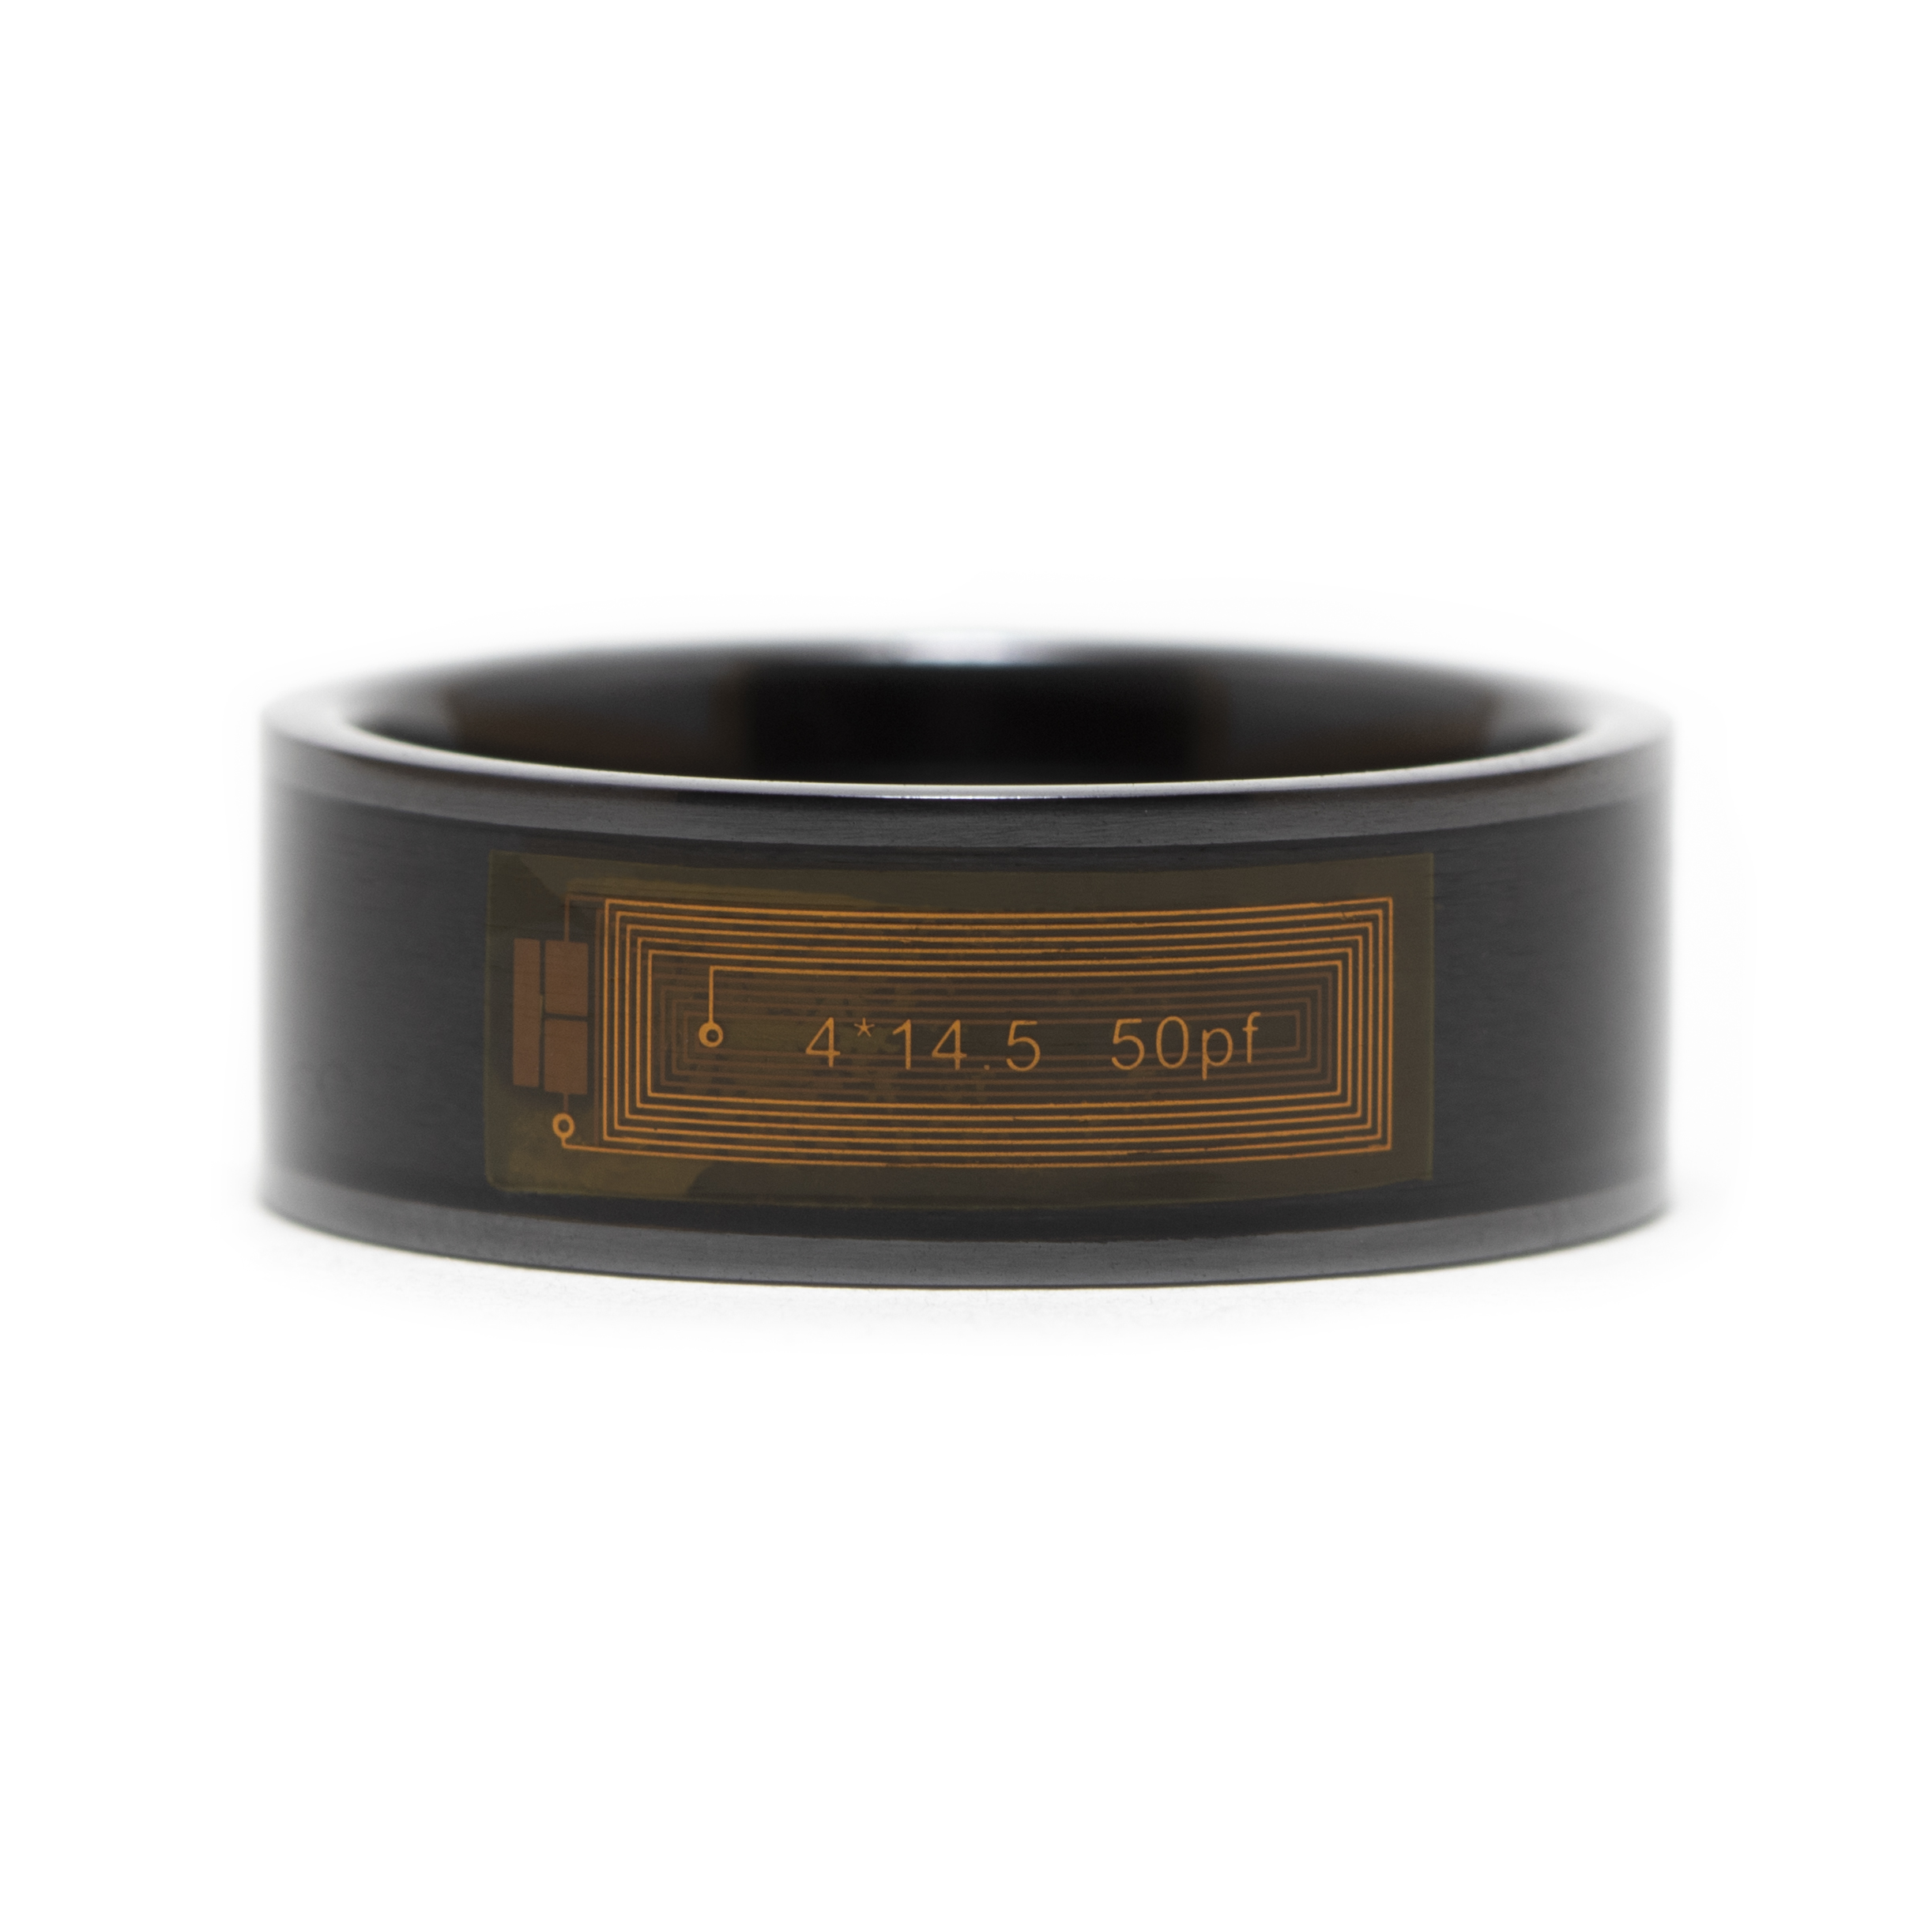 Black Ceramic NFC Smart Ring